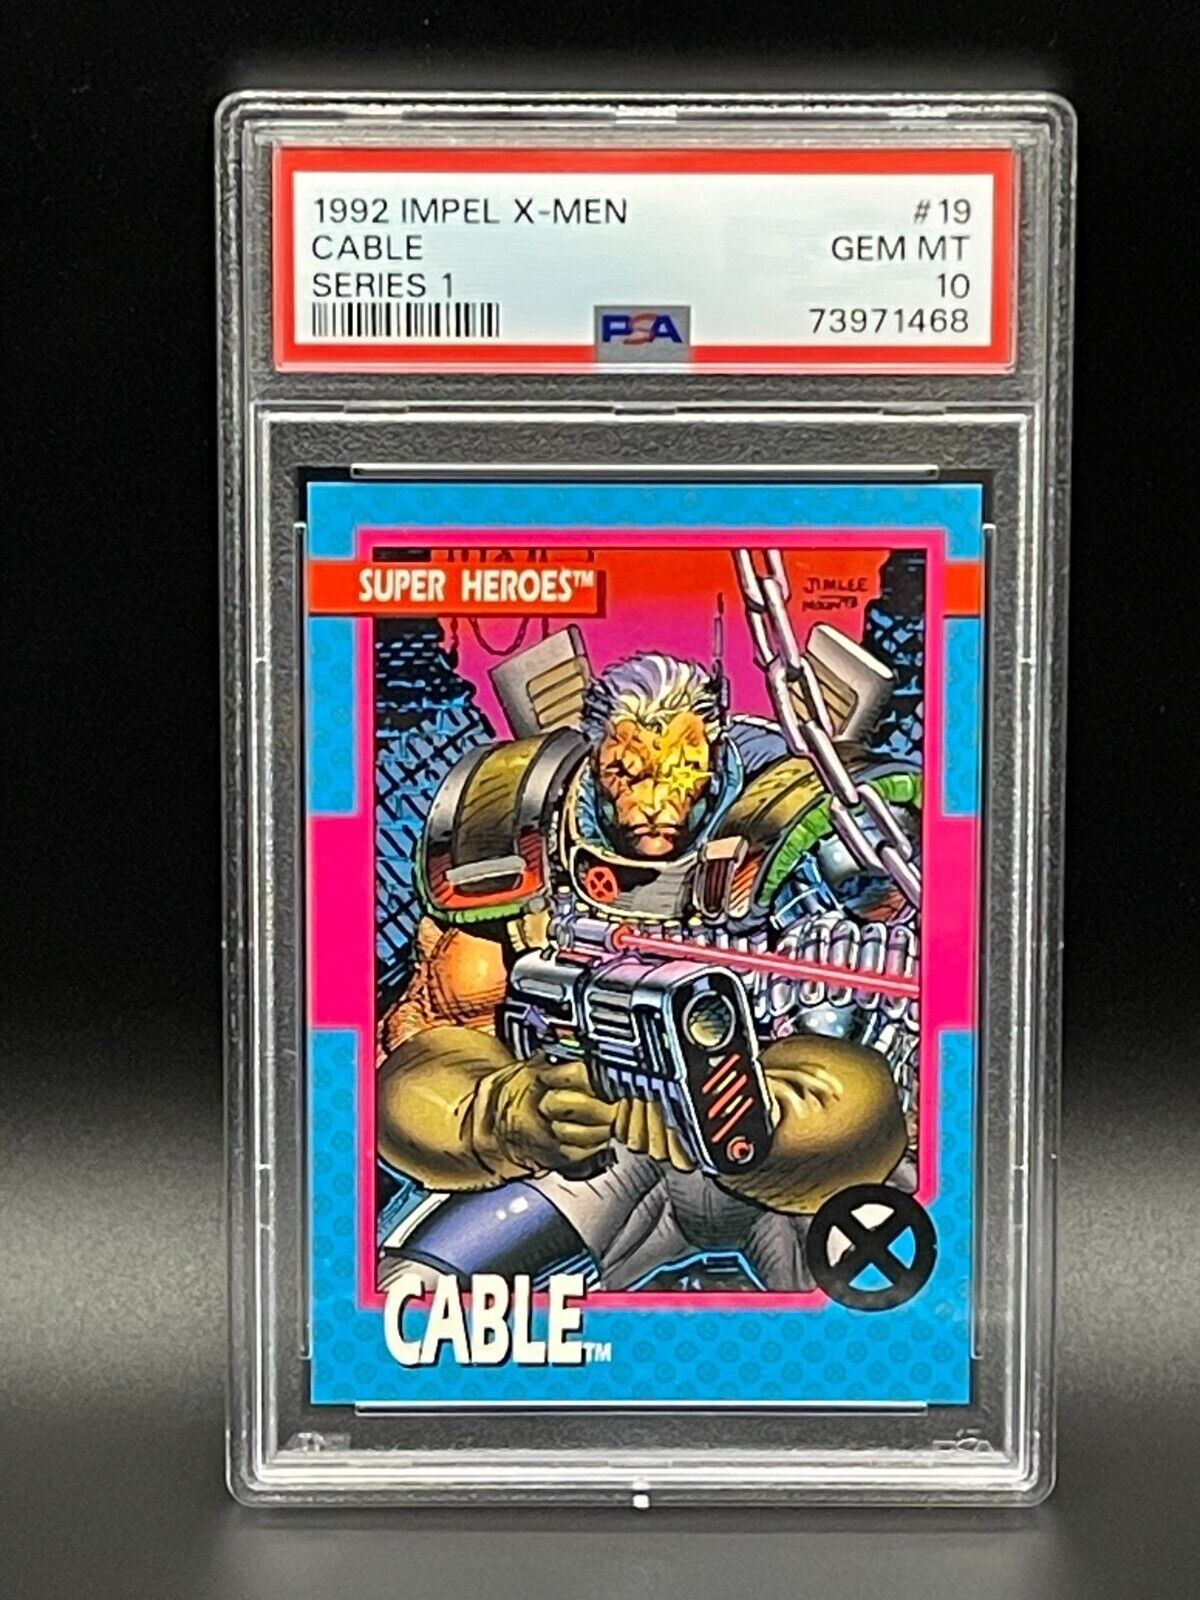 1992 Impel X-Men Series 1 #19 Cable PSA 10 GM MT